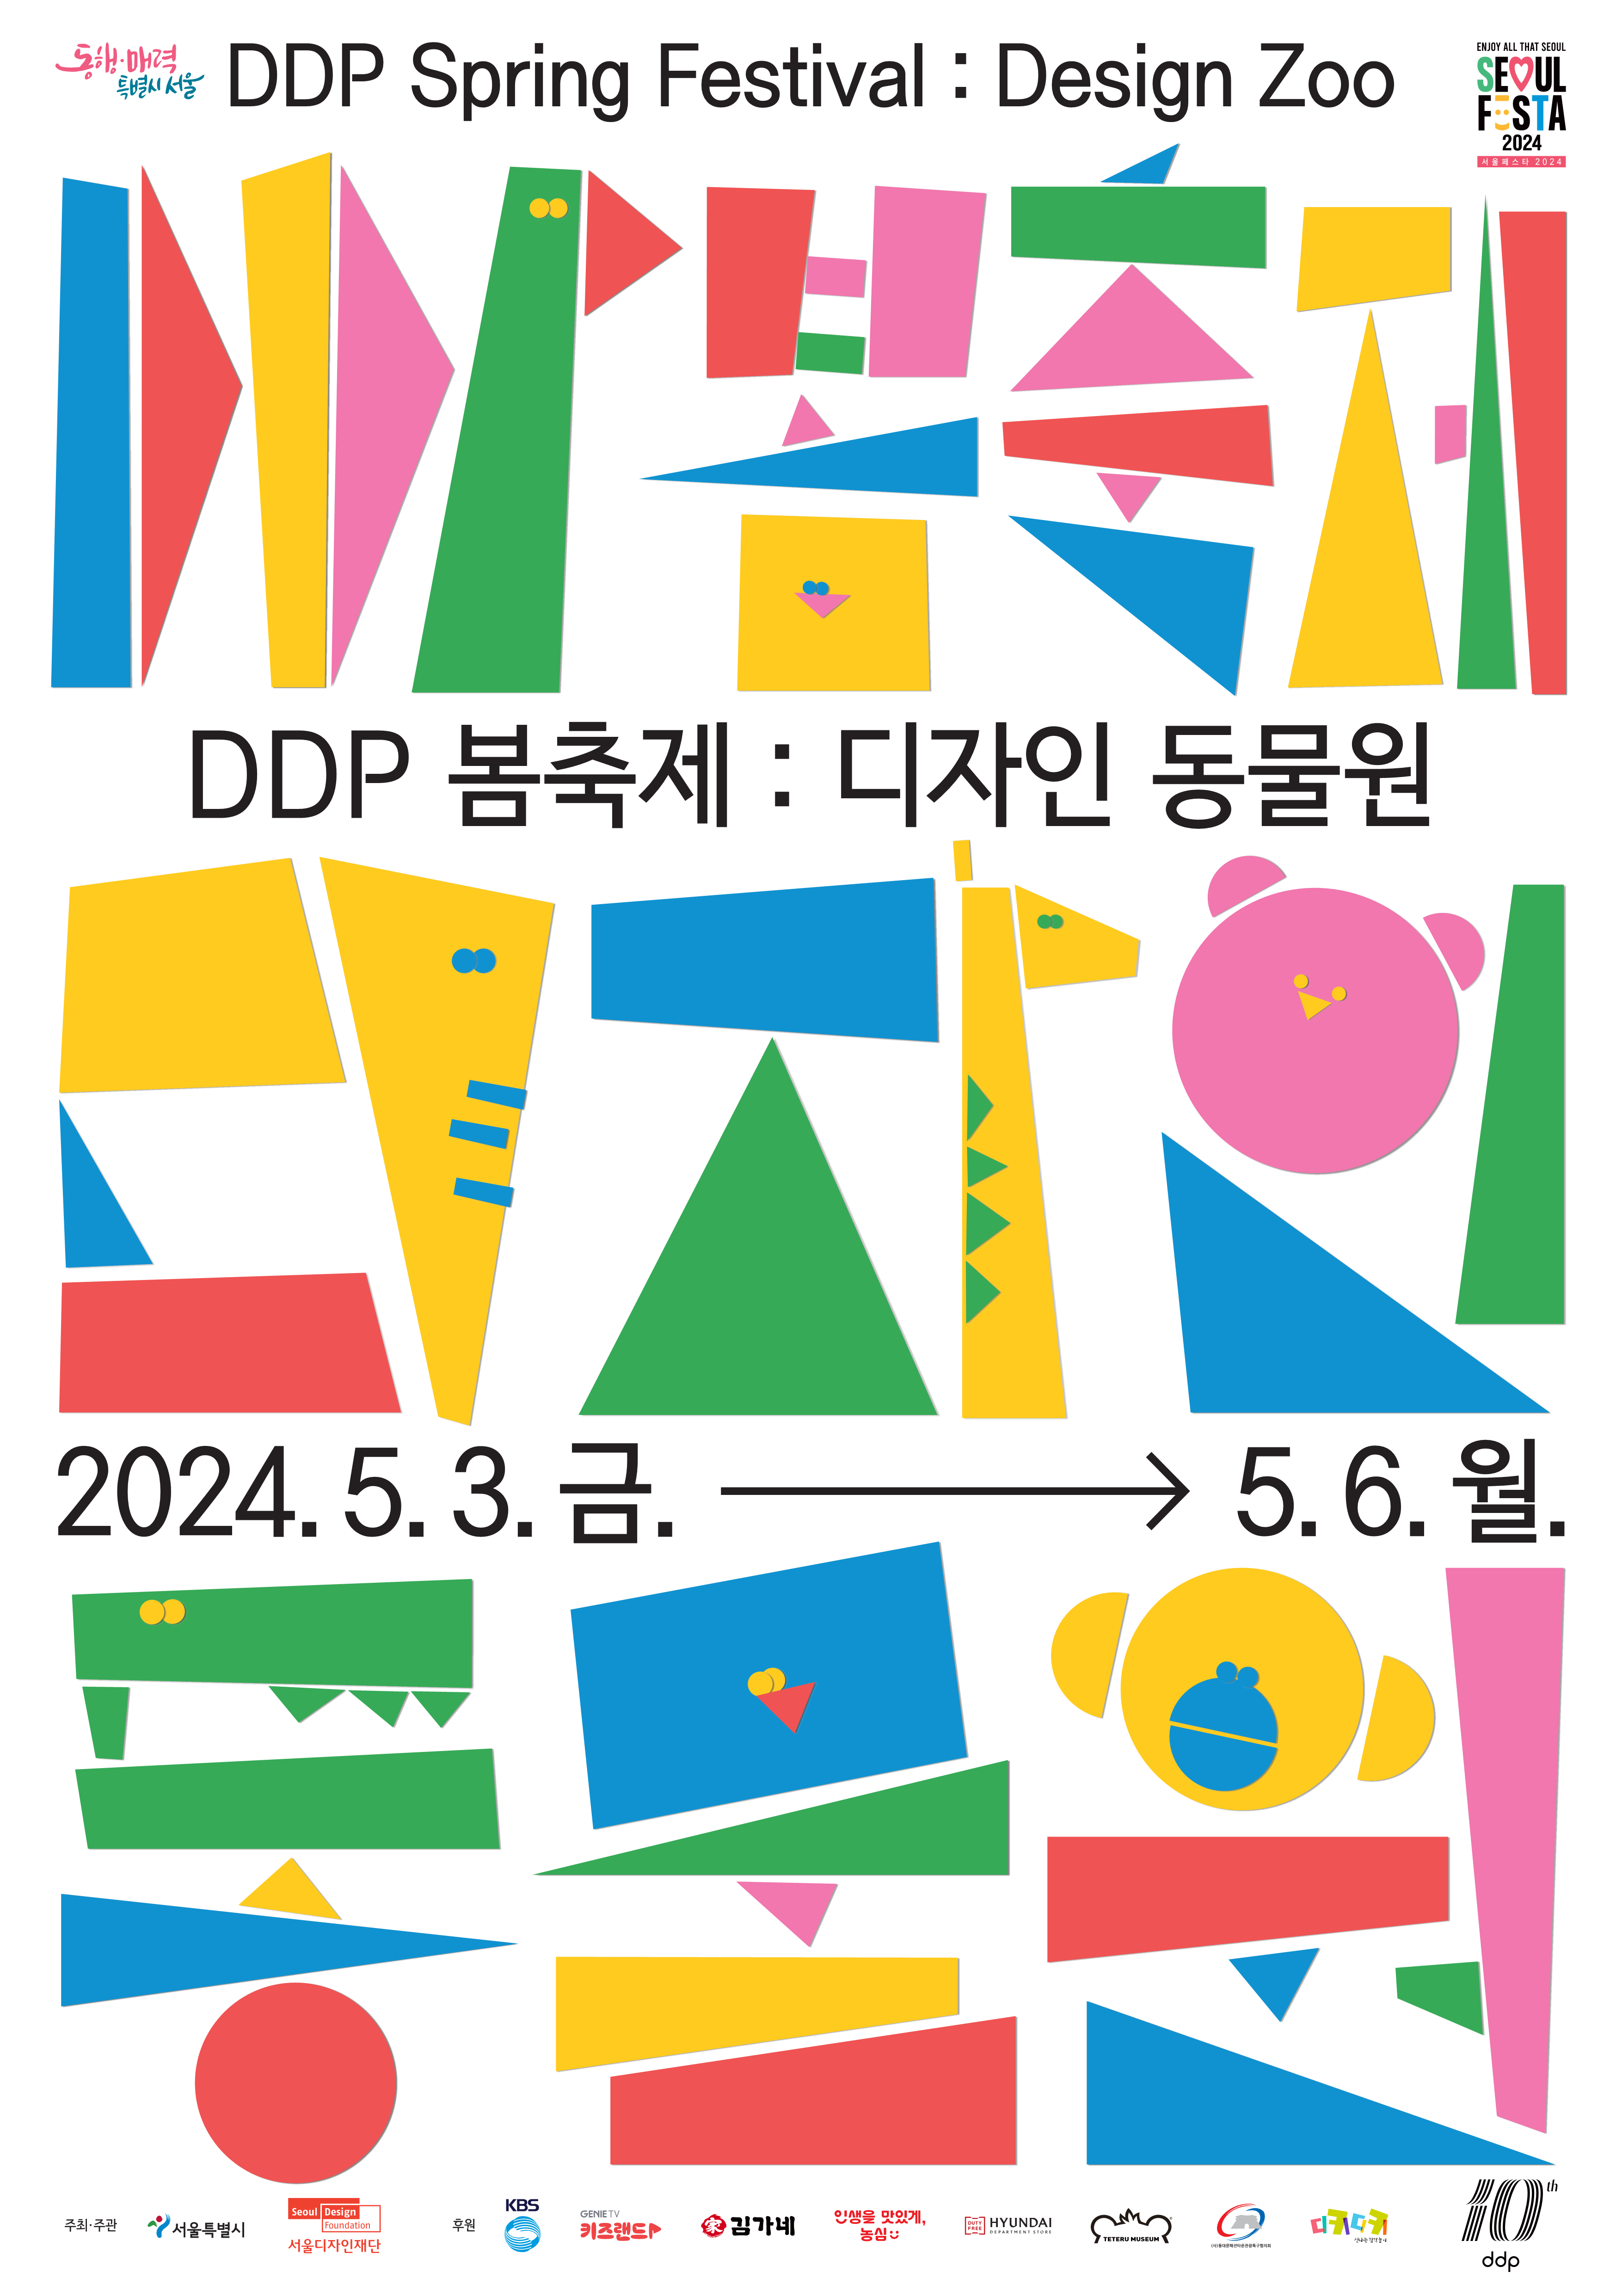 DDP 봄축제 : 디자인 동물원 DDP Spring Festival: Design Zoo 2024.5.3.금.-5.6.월.